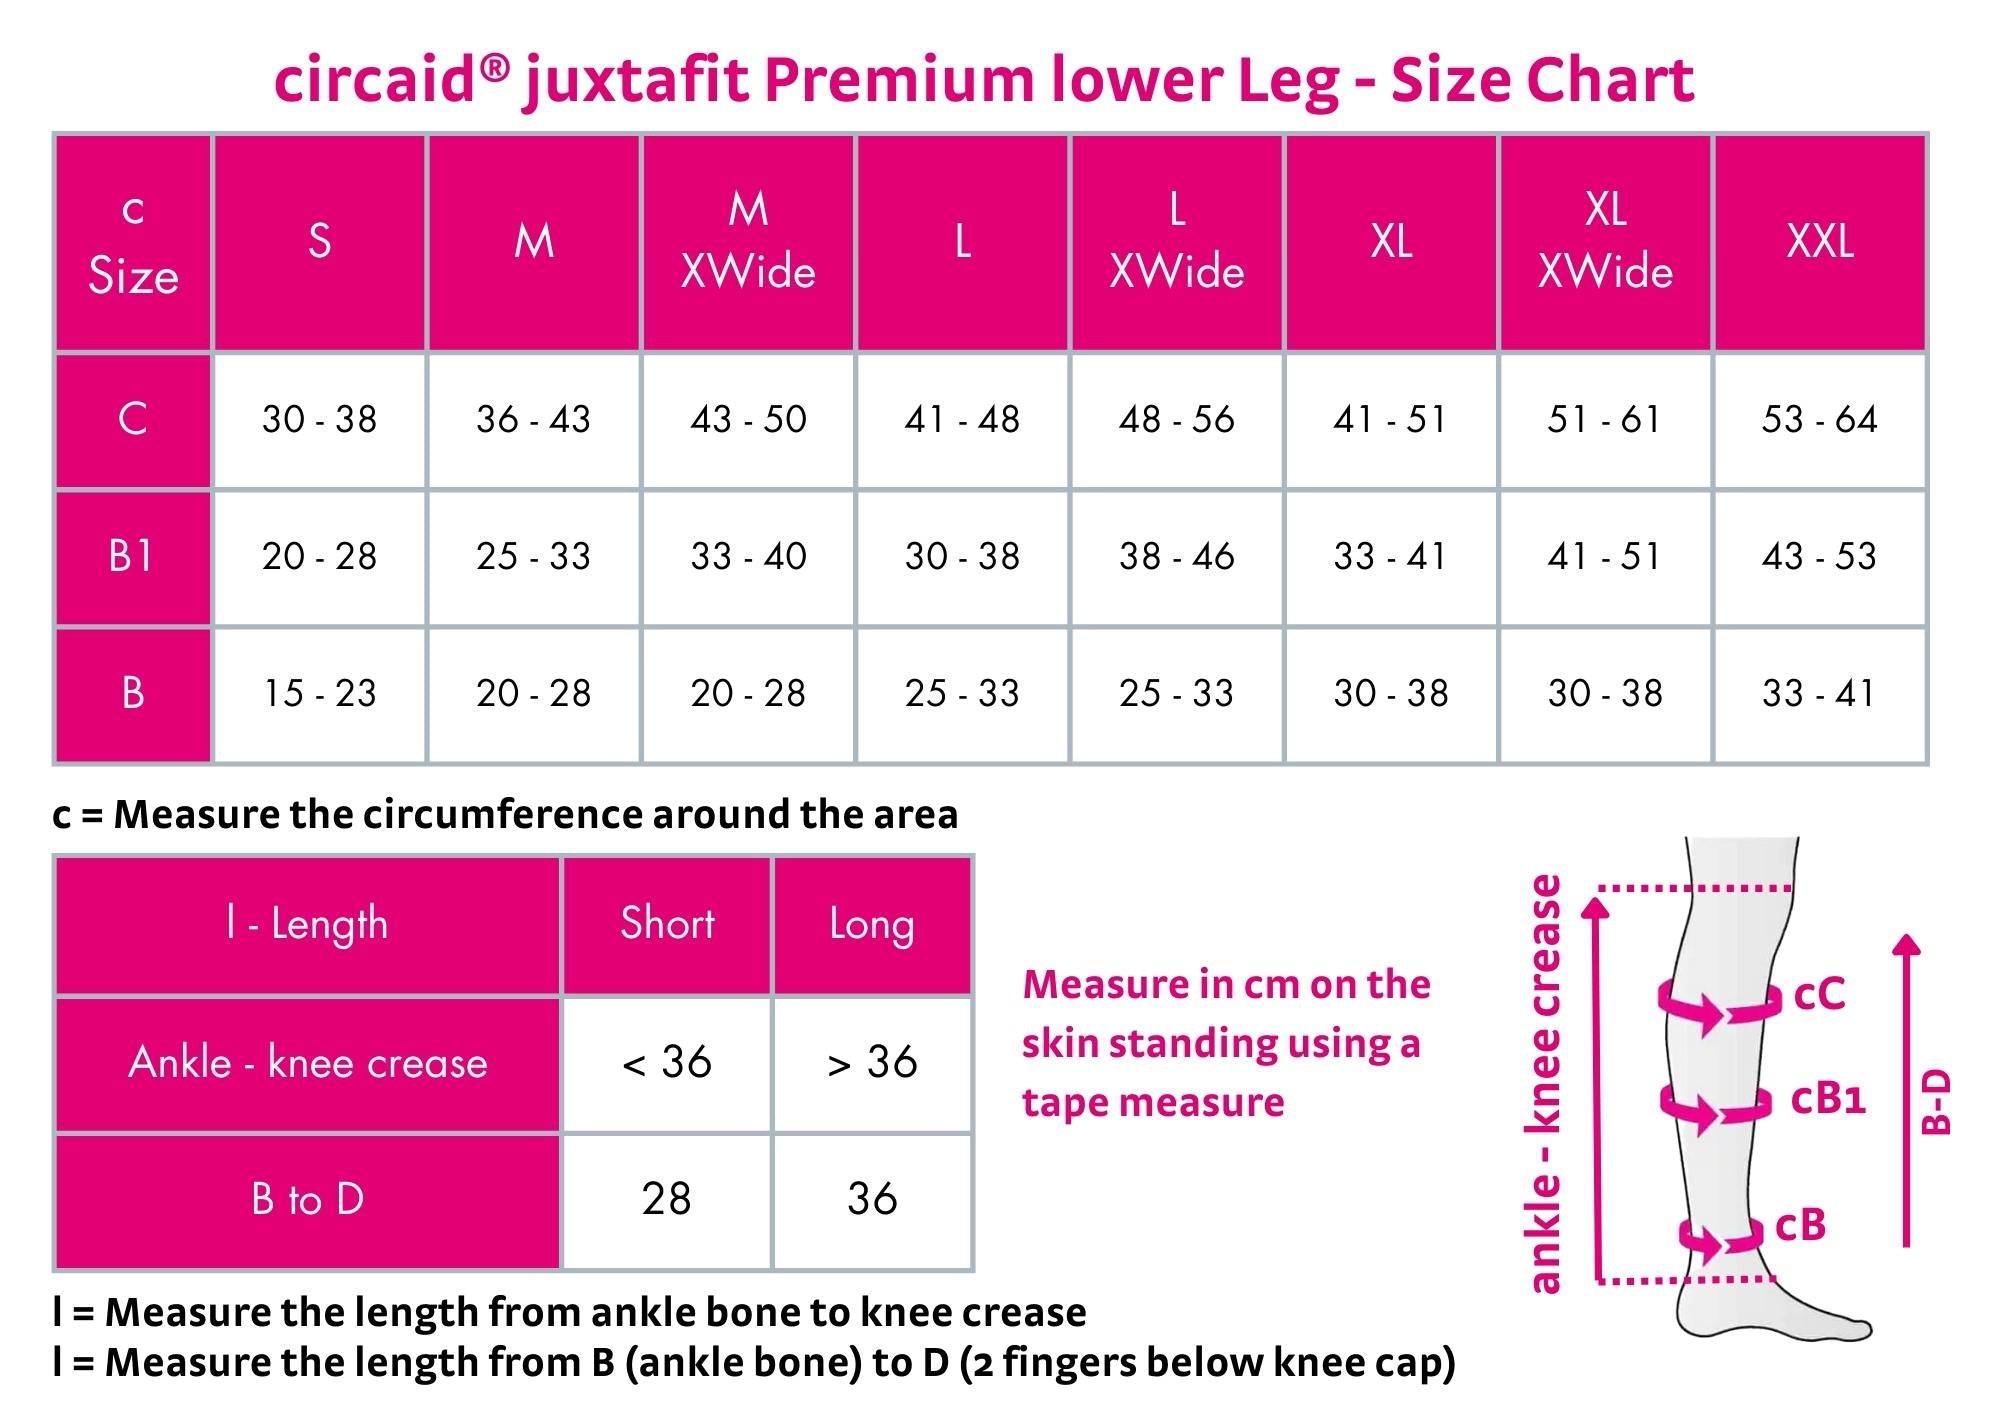 circaid juxtafit premium lower leg long - Elevation Medical Supply